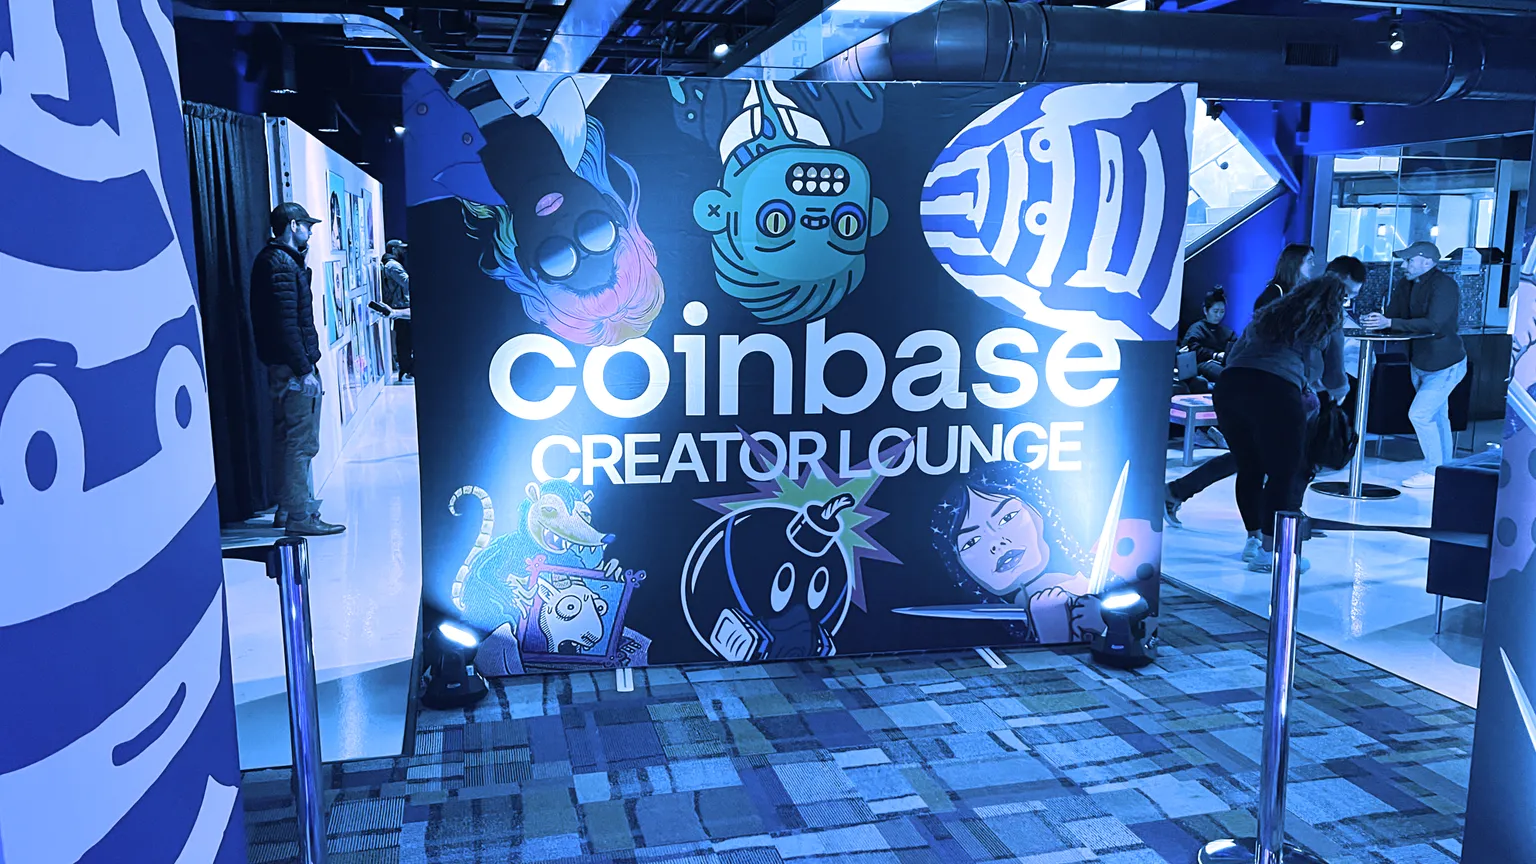 Coinbase's Creator Lounge at VeeCon 2022. Image: Decrypt